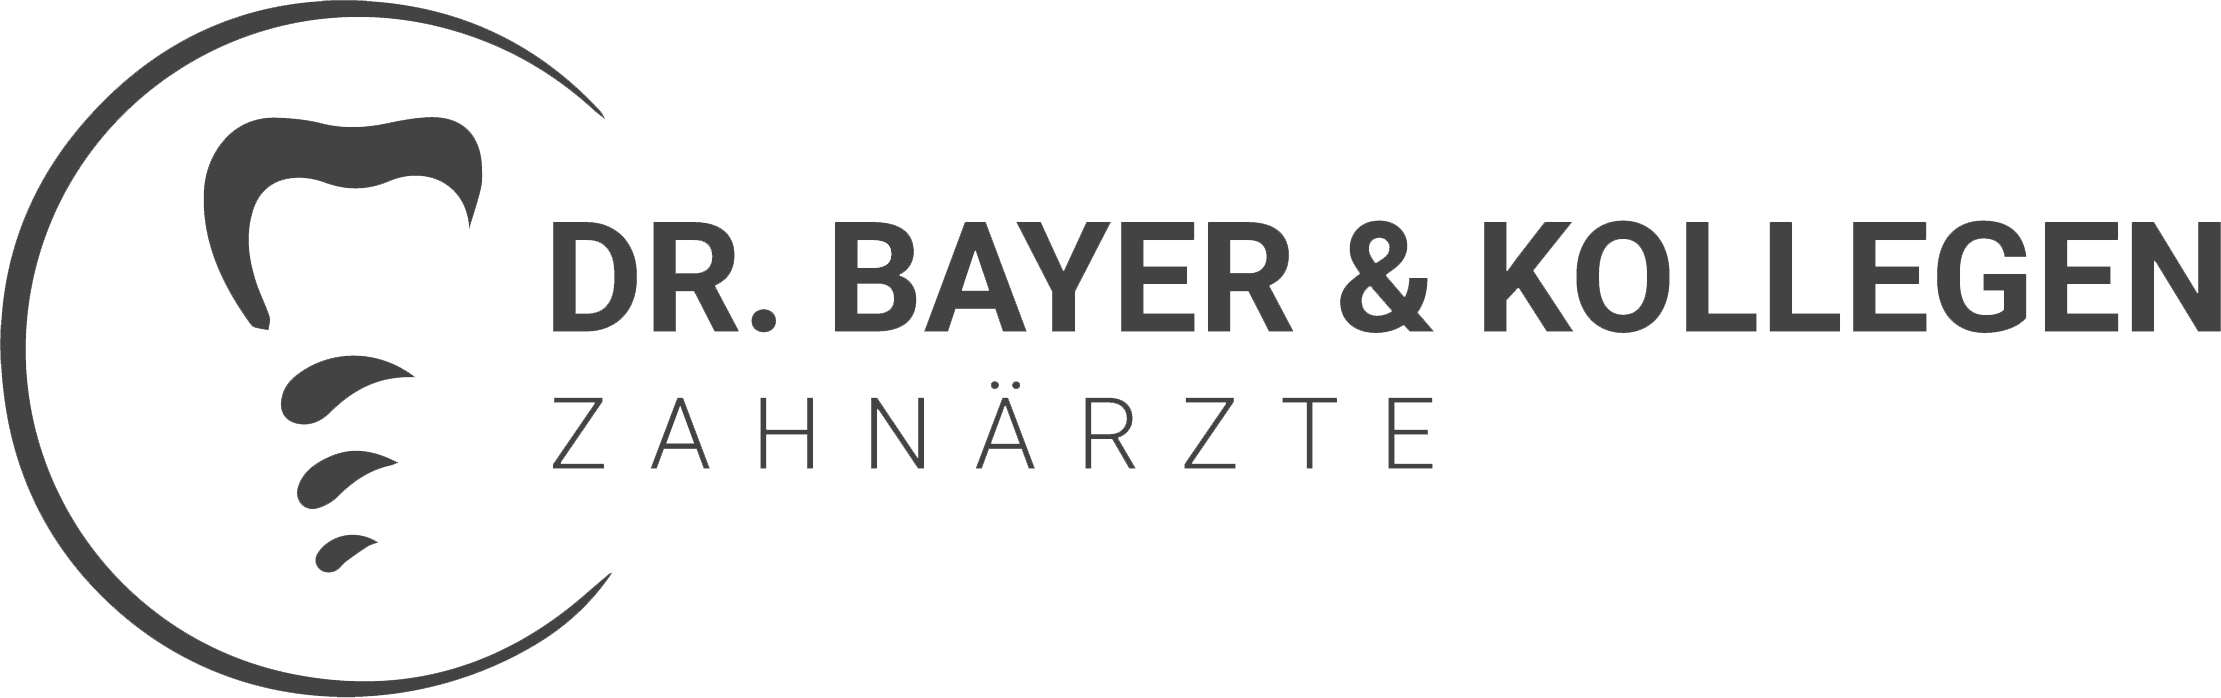 Dr. Bayer & Kollegen II logo